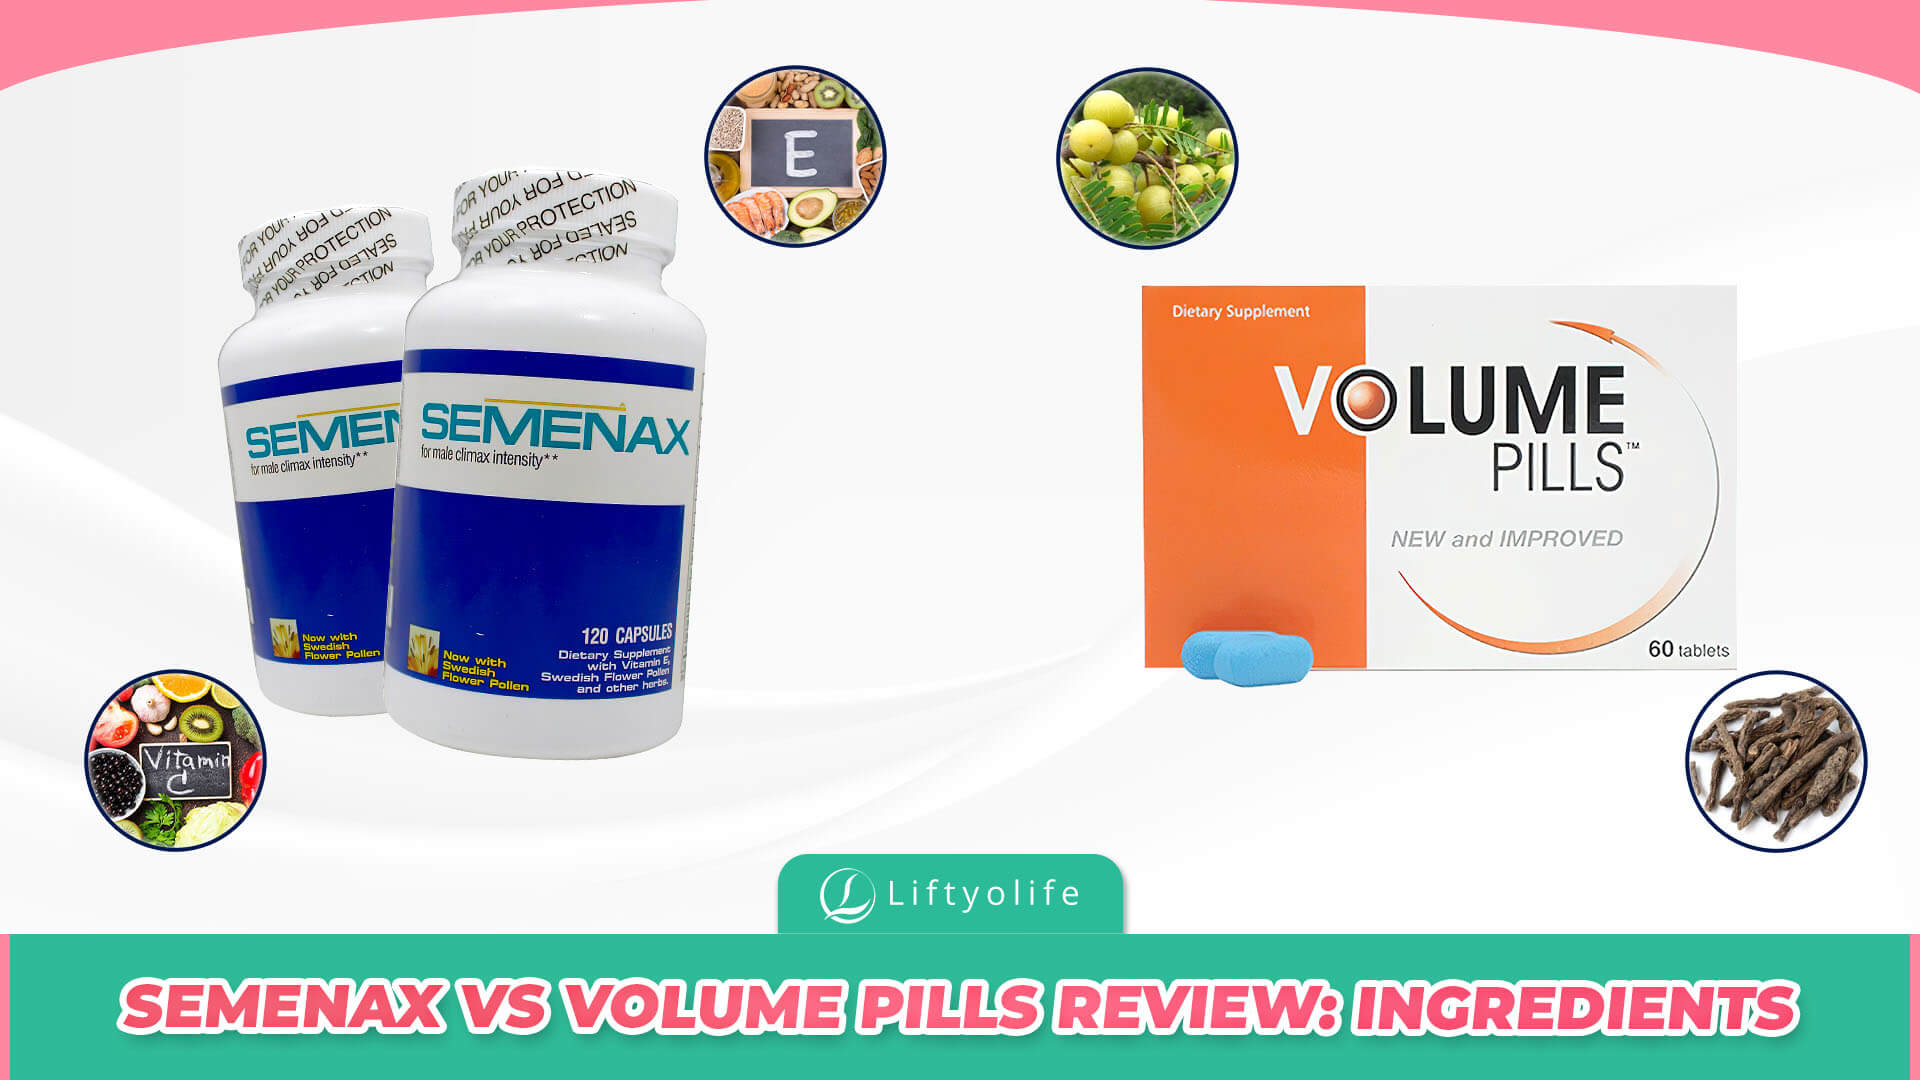 Semenax vs Volume Pills Review: Ingredients